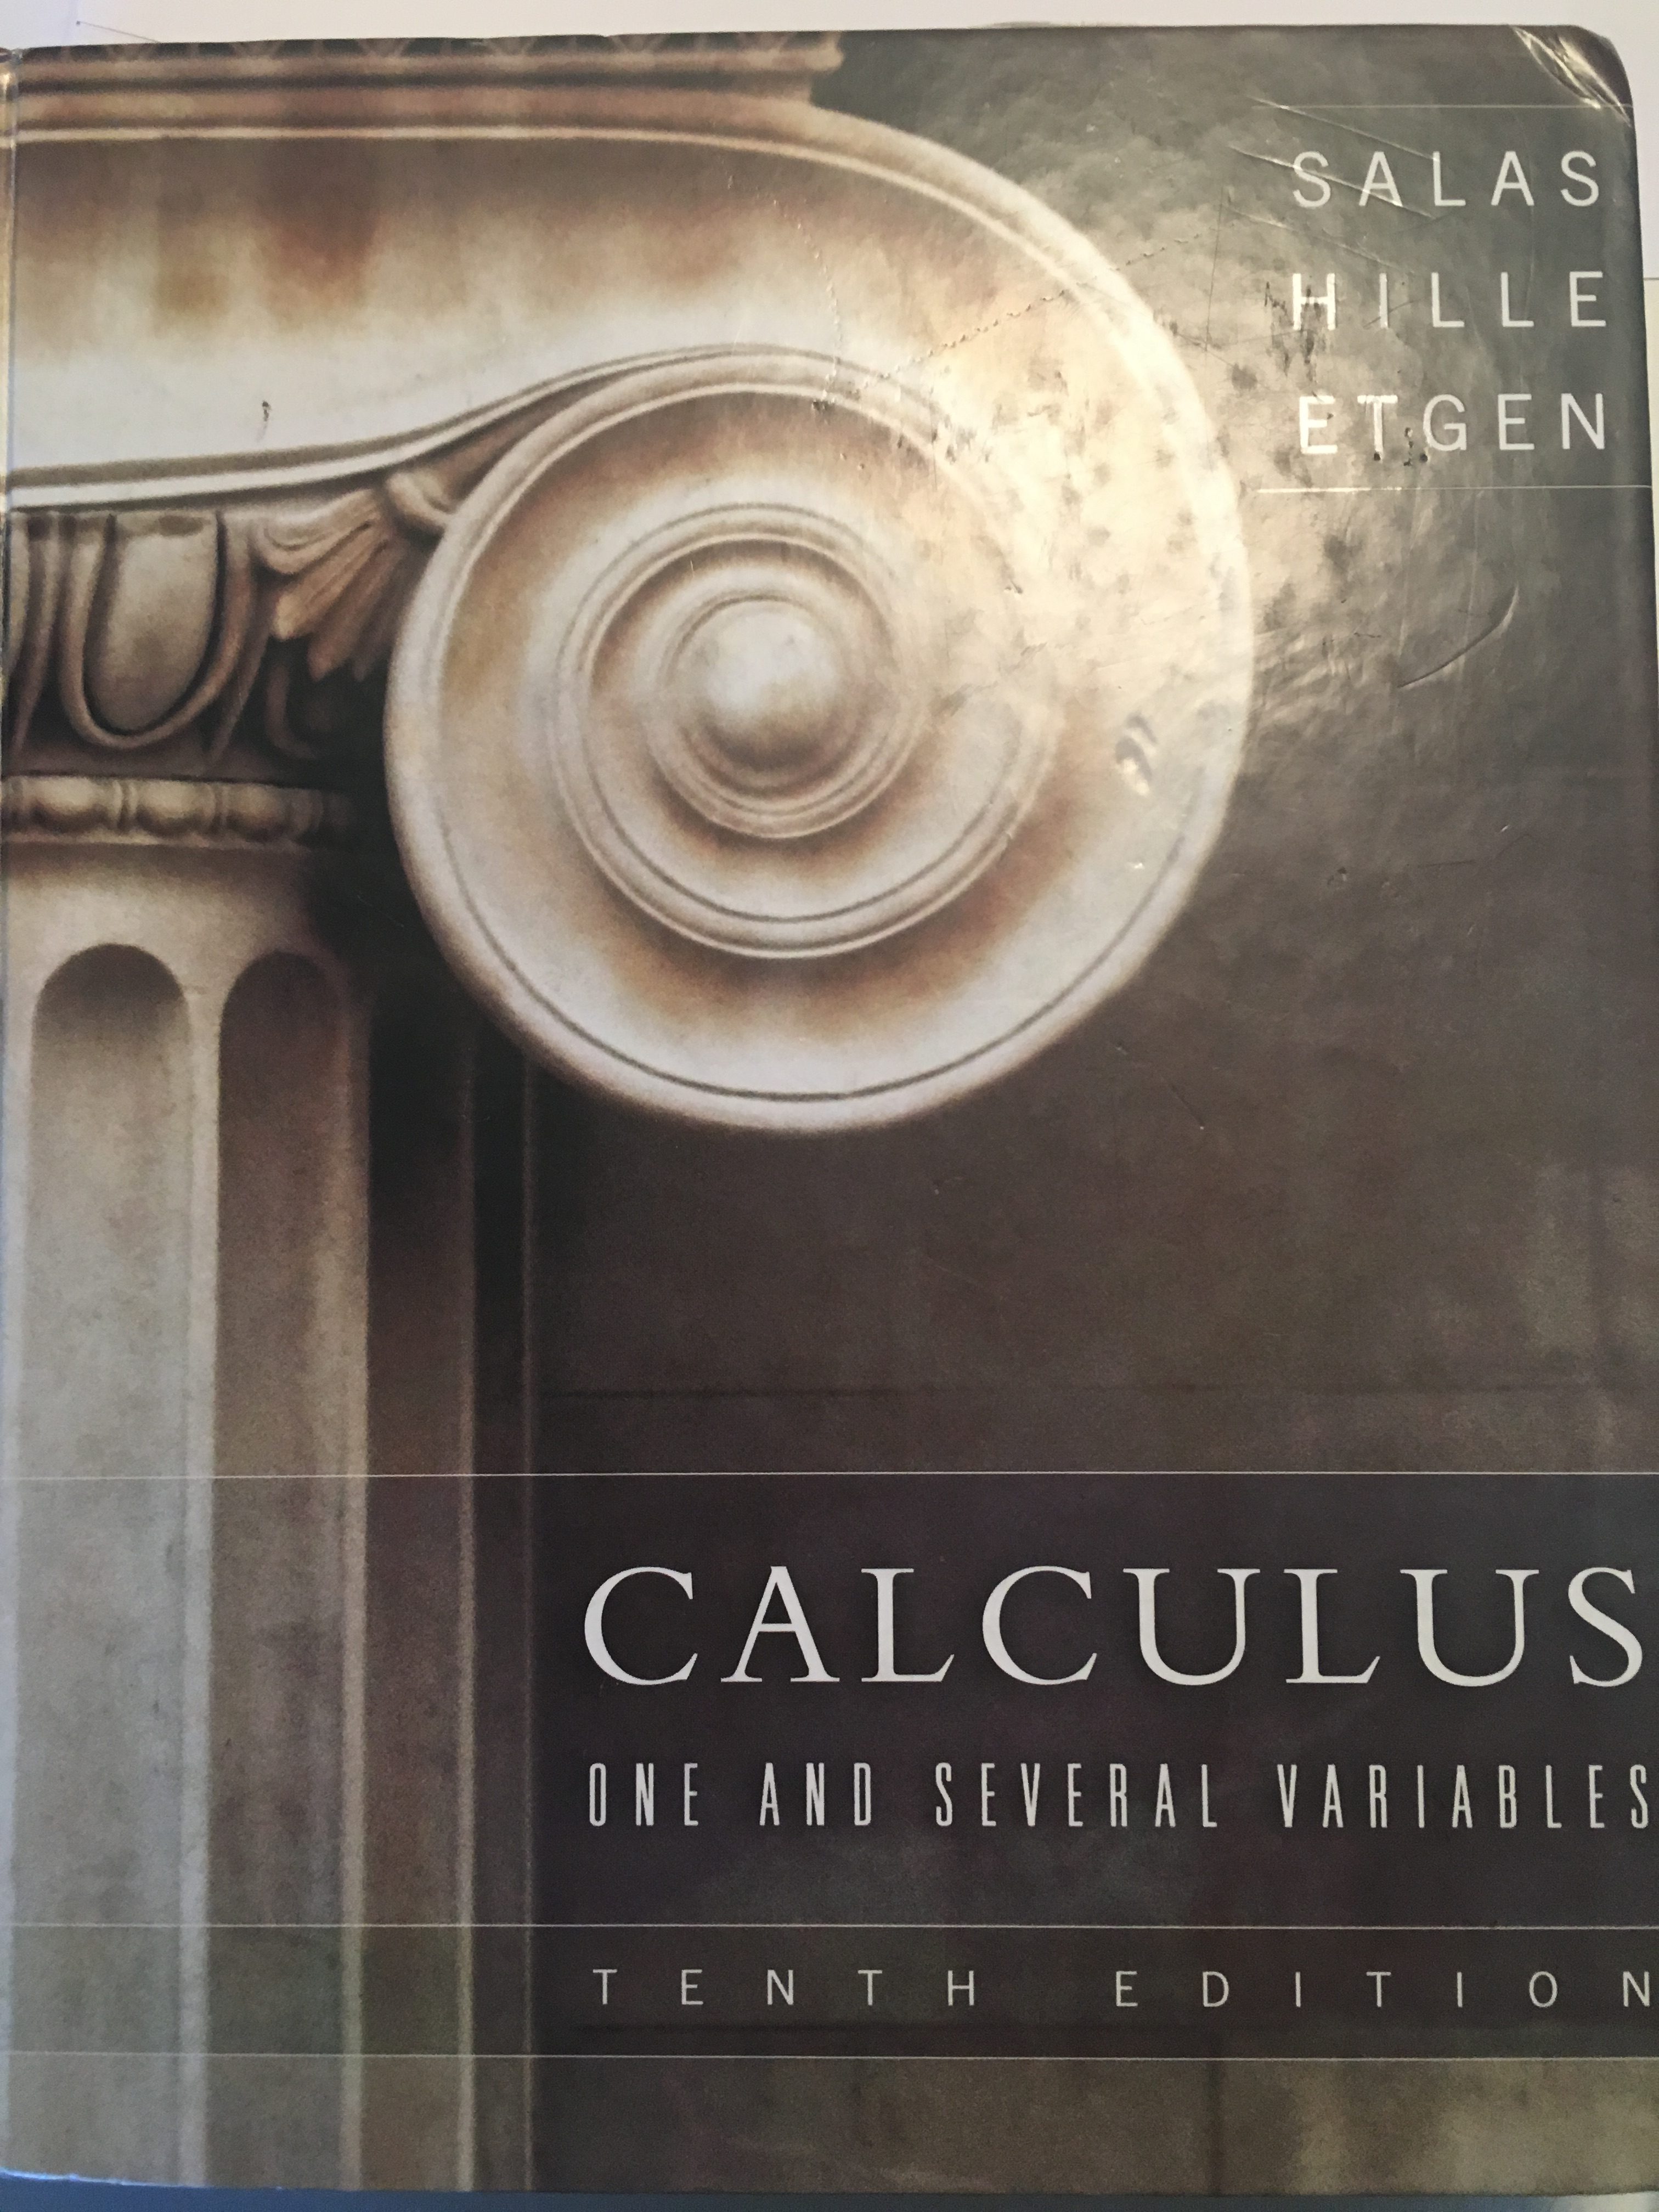 calculus 9th edition by salas hille etgen pdf to jpg